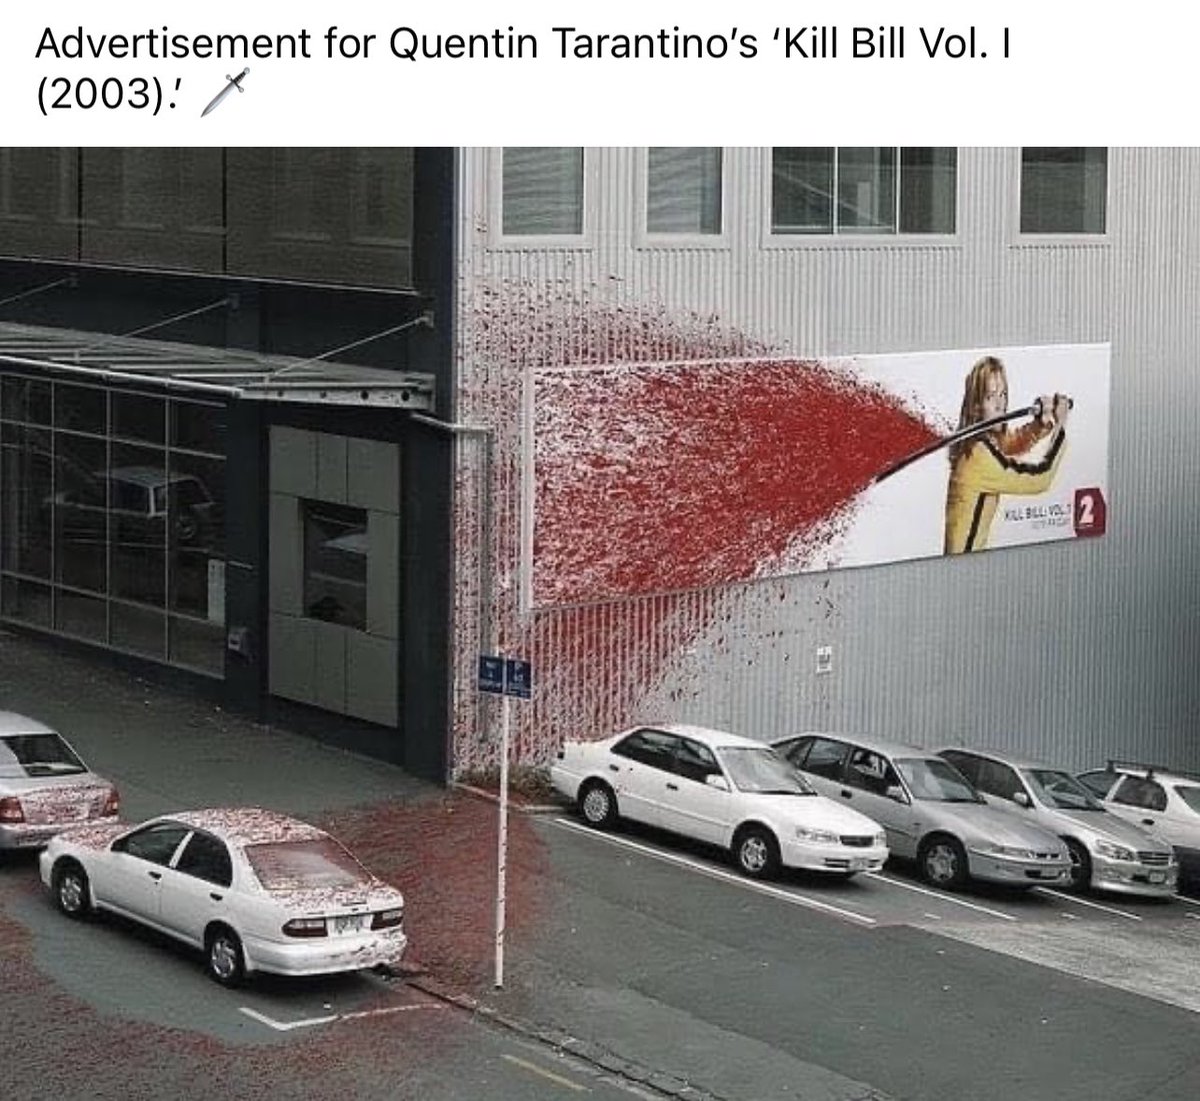 Ads like this 😎

#quentintarantino #killbill #killbillvol1 #umathurman #umathurmanfilms #tarantinofilms #indiefilm #filmfest